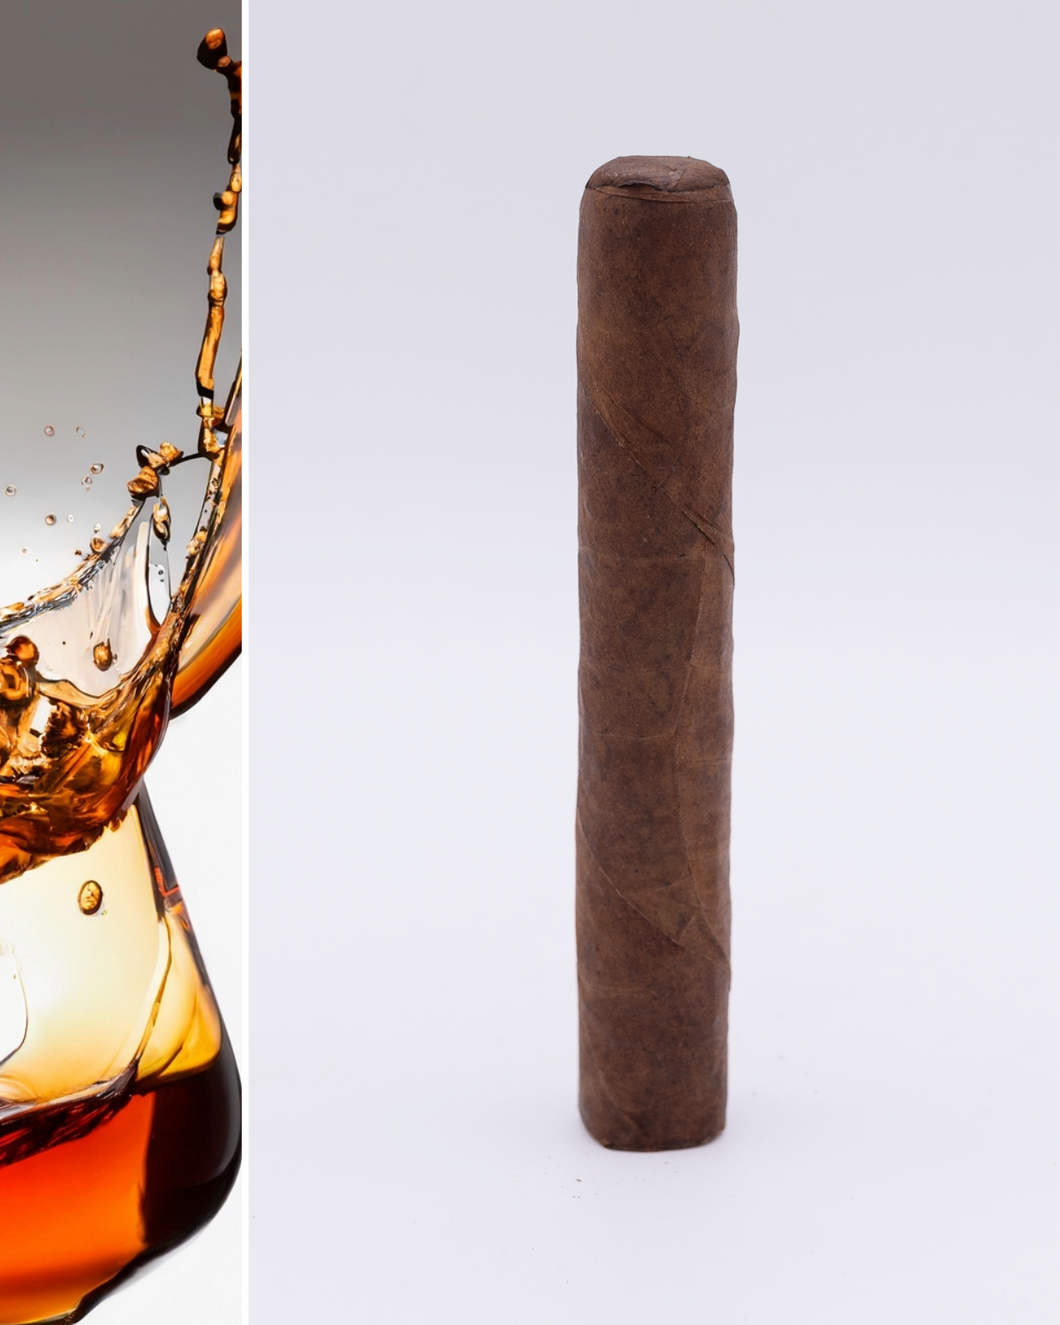 Kong Cognac Infused Cigar